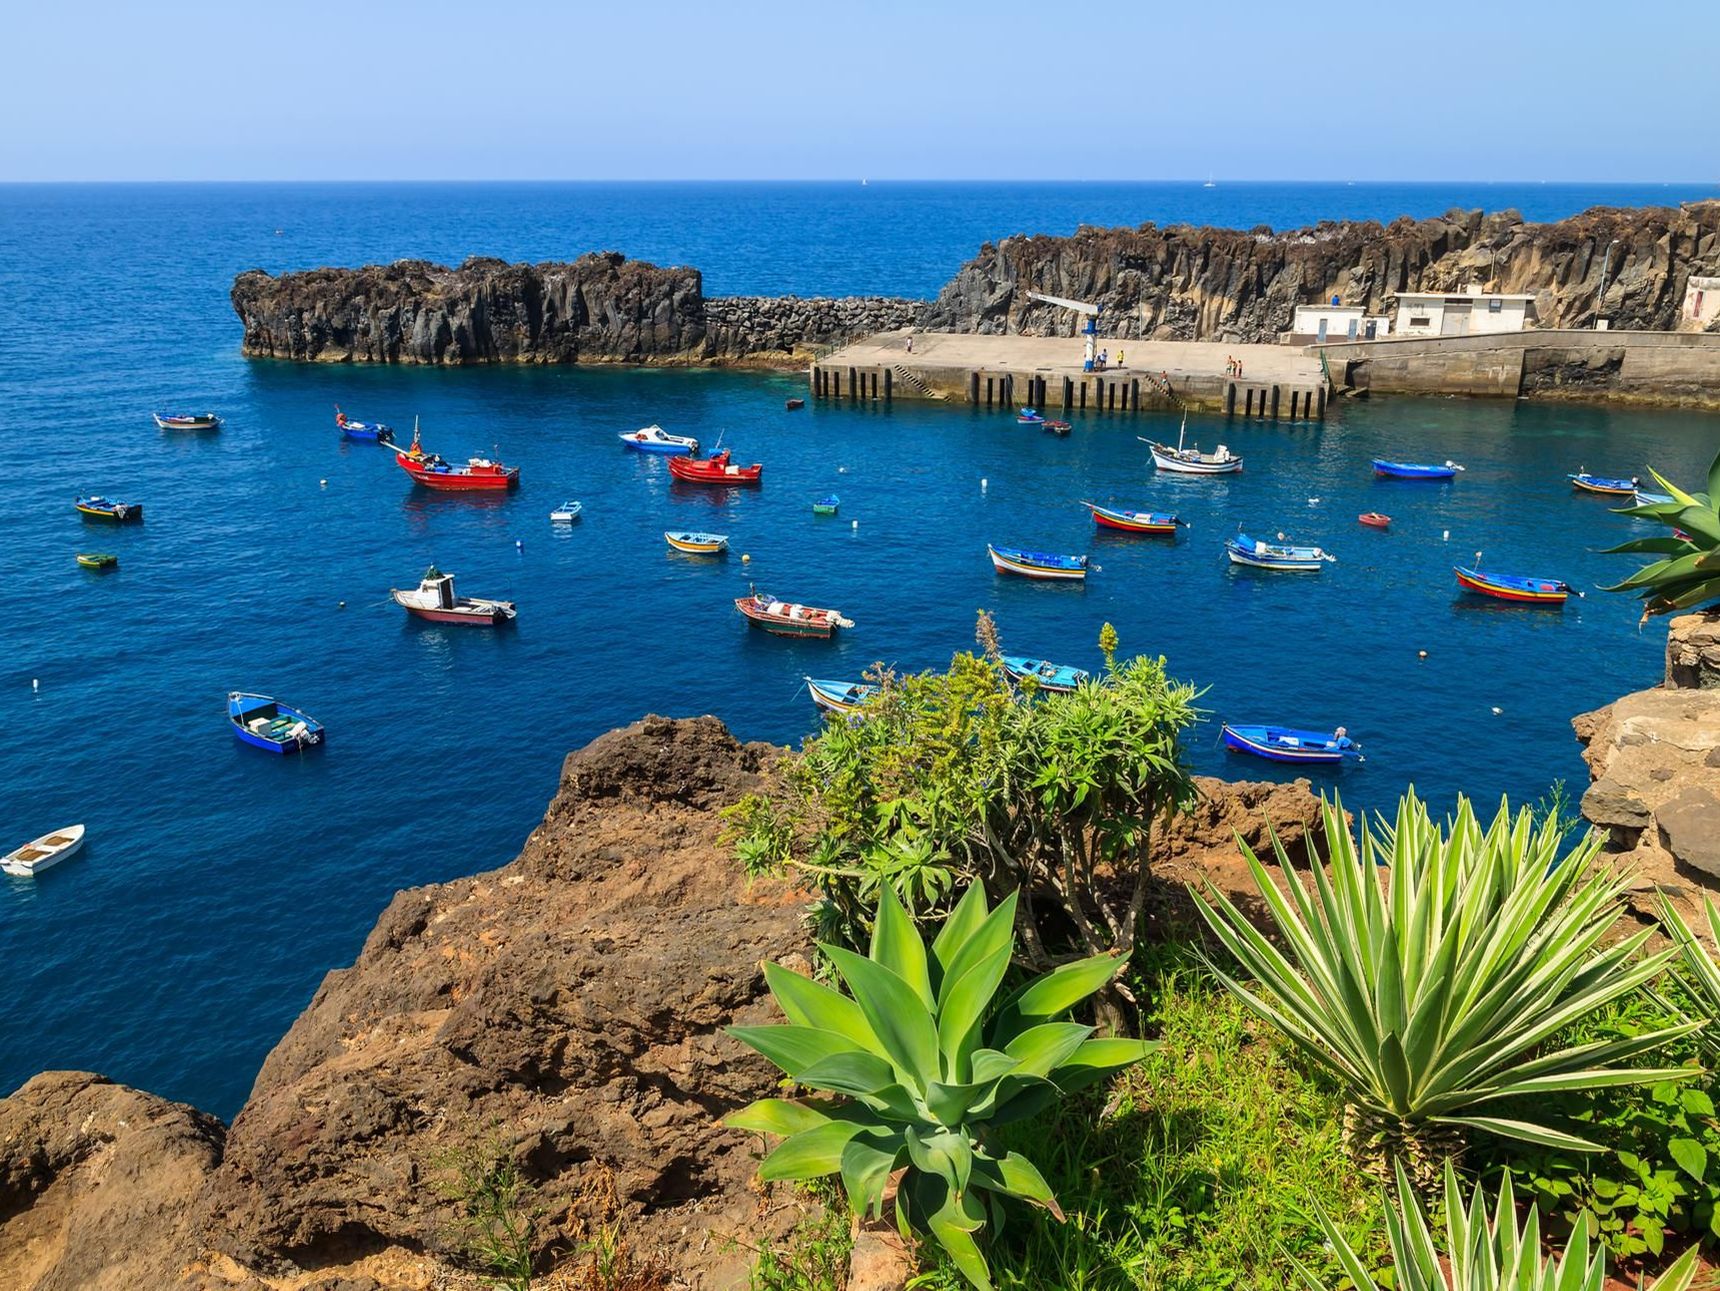 Gezellige vissersbootjes - Fly & drive Madeira - Charms of Madeira